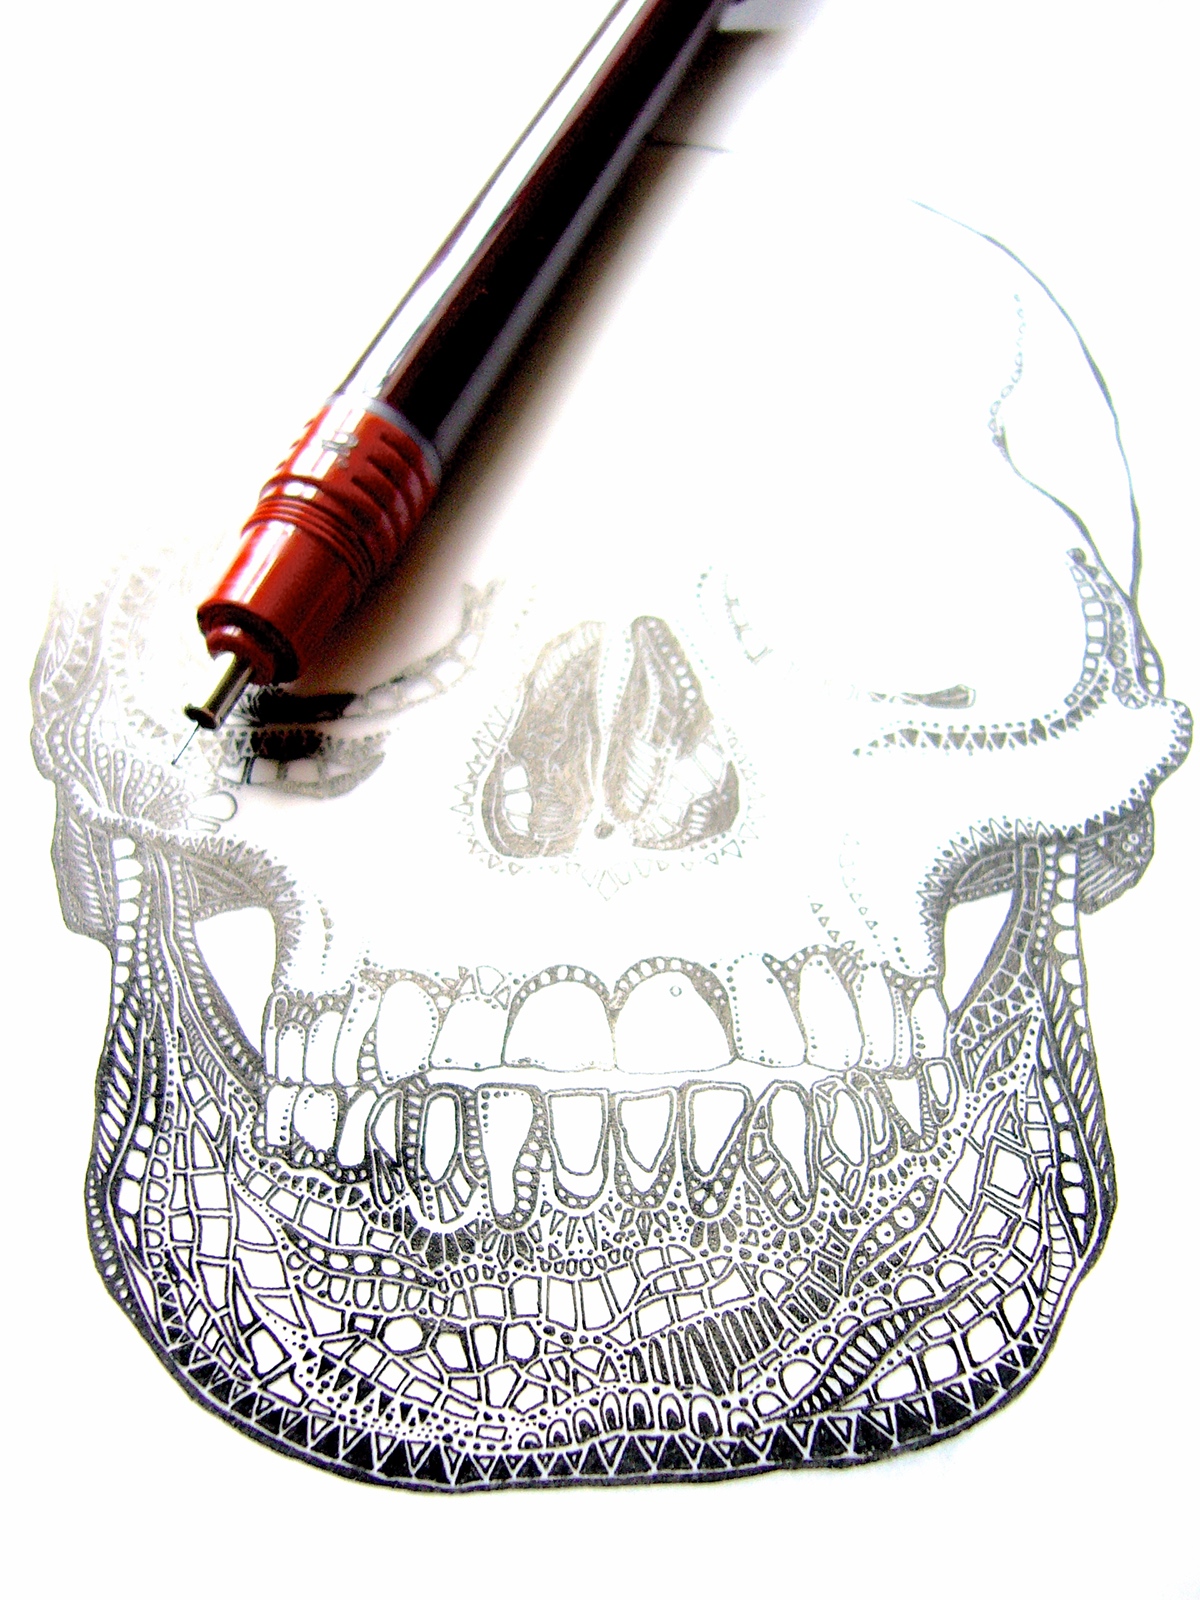 art pen drawing ink drawing skull skeleton bones pen and ink black and white monochrome gothic pattern print design detail teeth